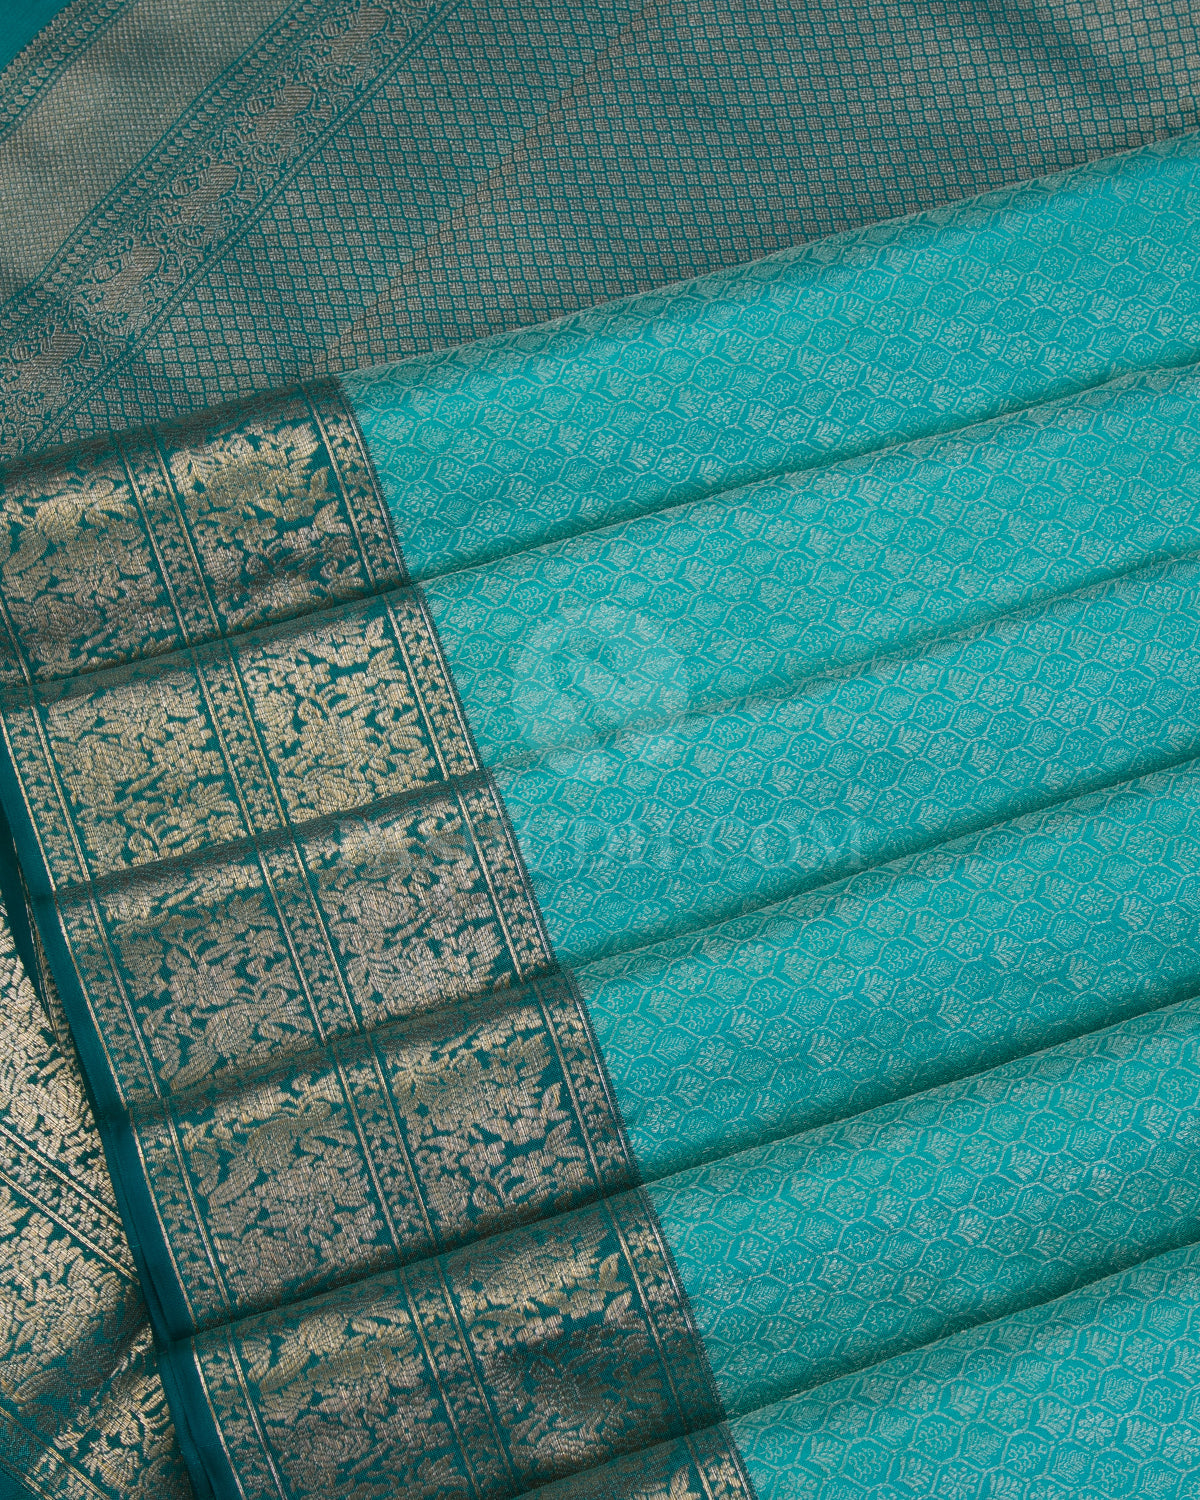 Turquoise Blue and Teal Kanjivaram Silk Saree - DT255(A) - View 3